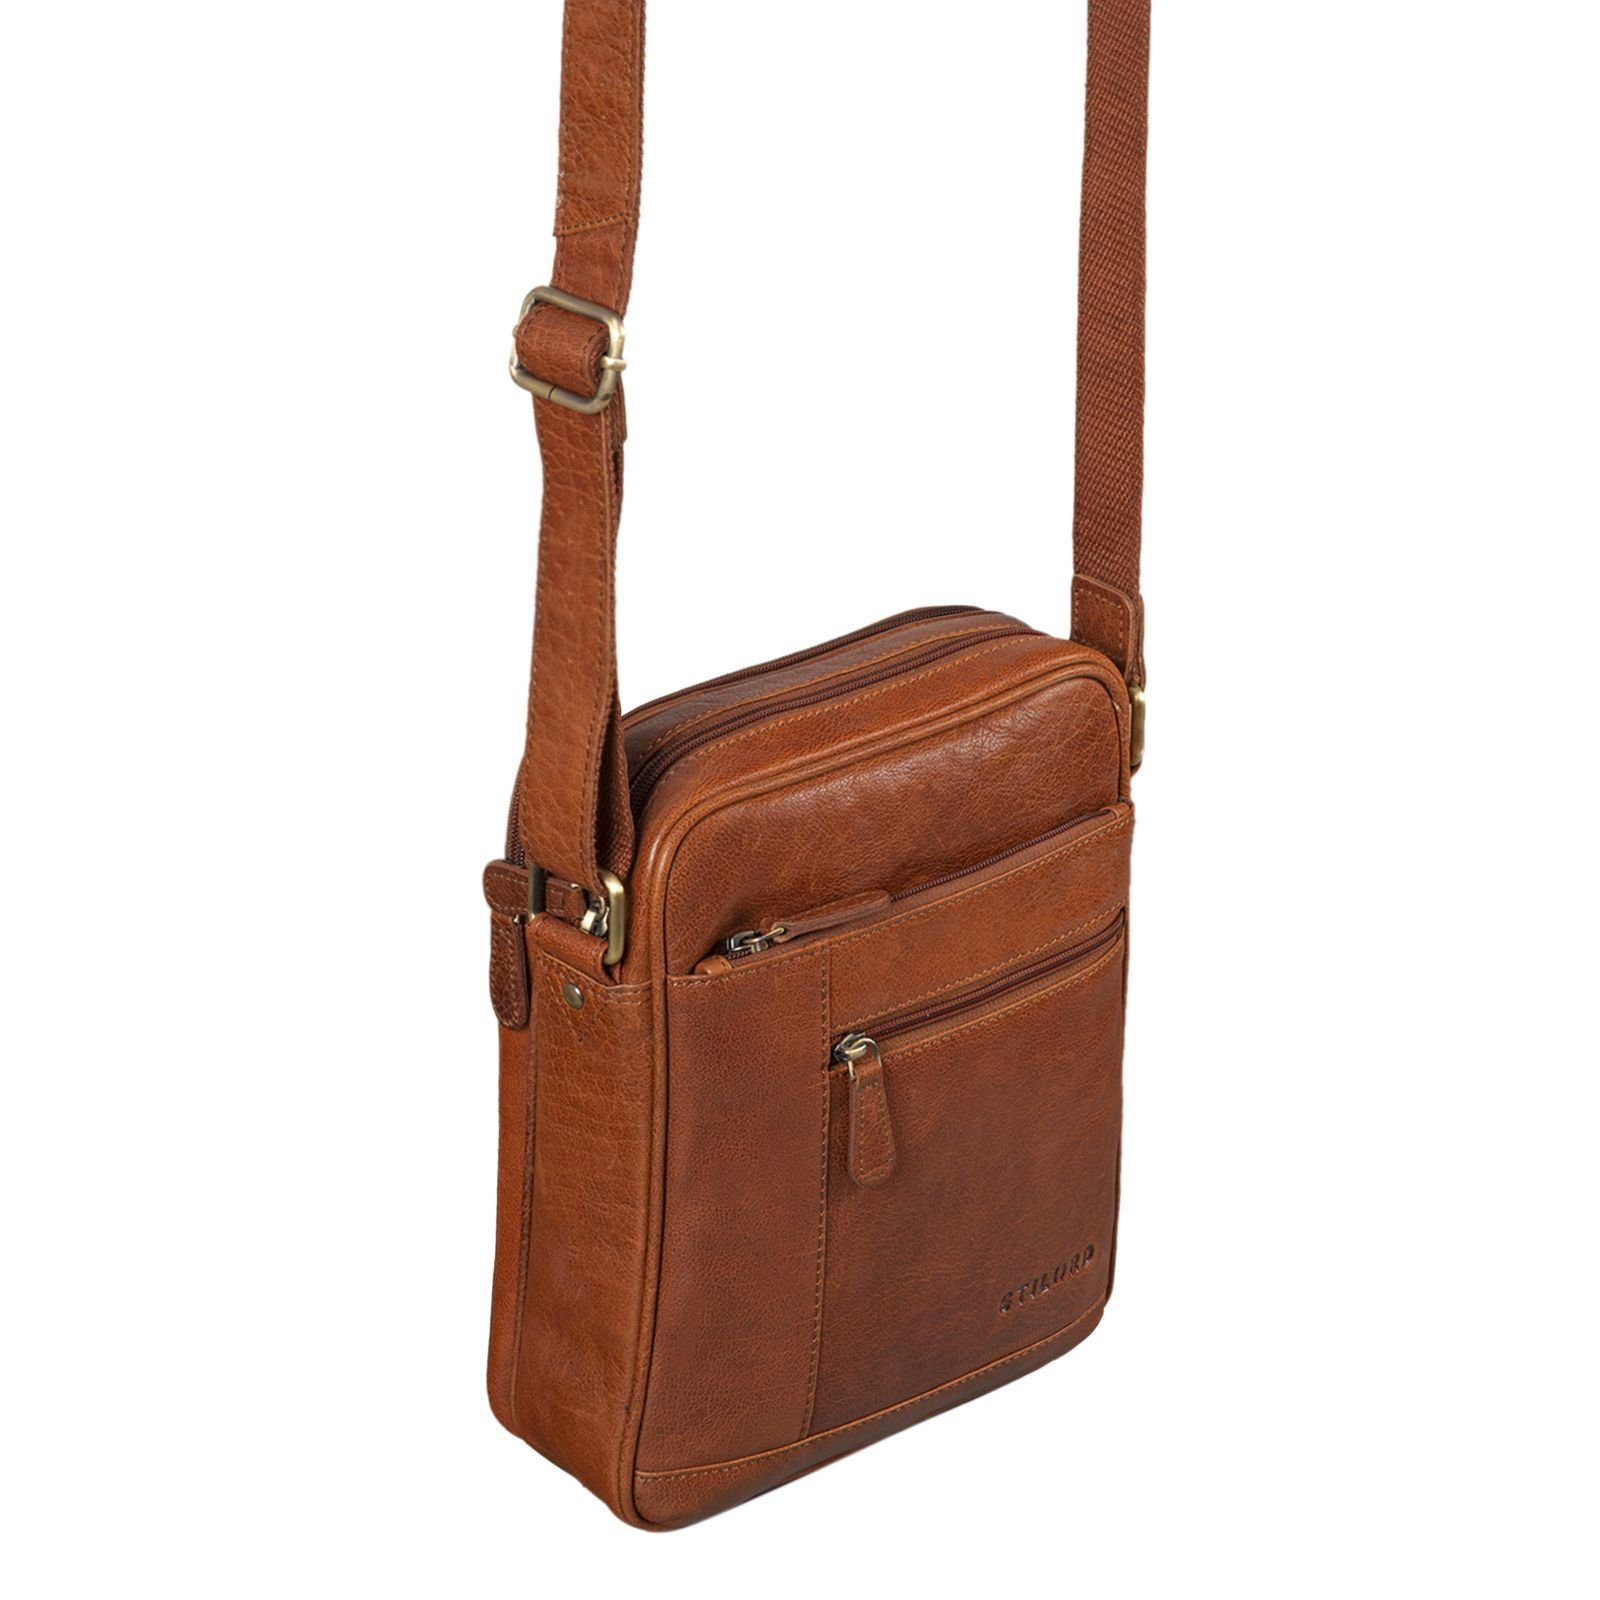 STILORD Messenger Bag "Diego" klein Leder Herrentasche Vintage maraska - braun